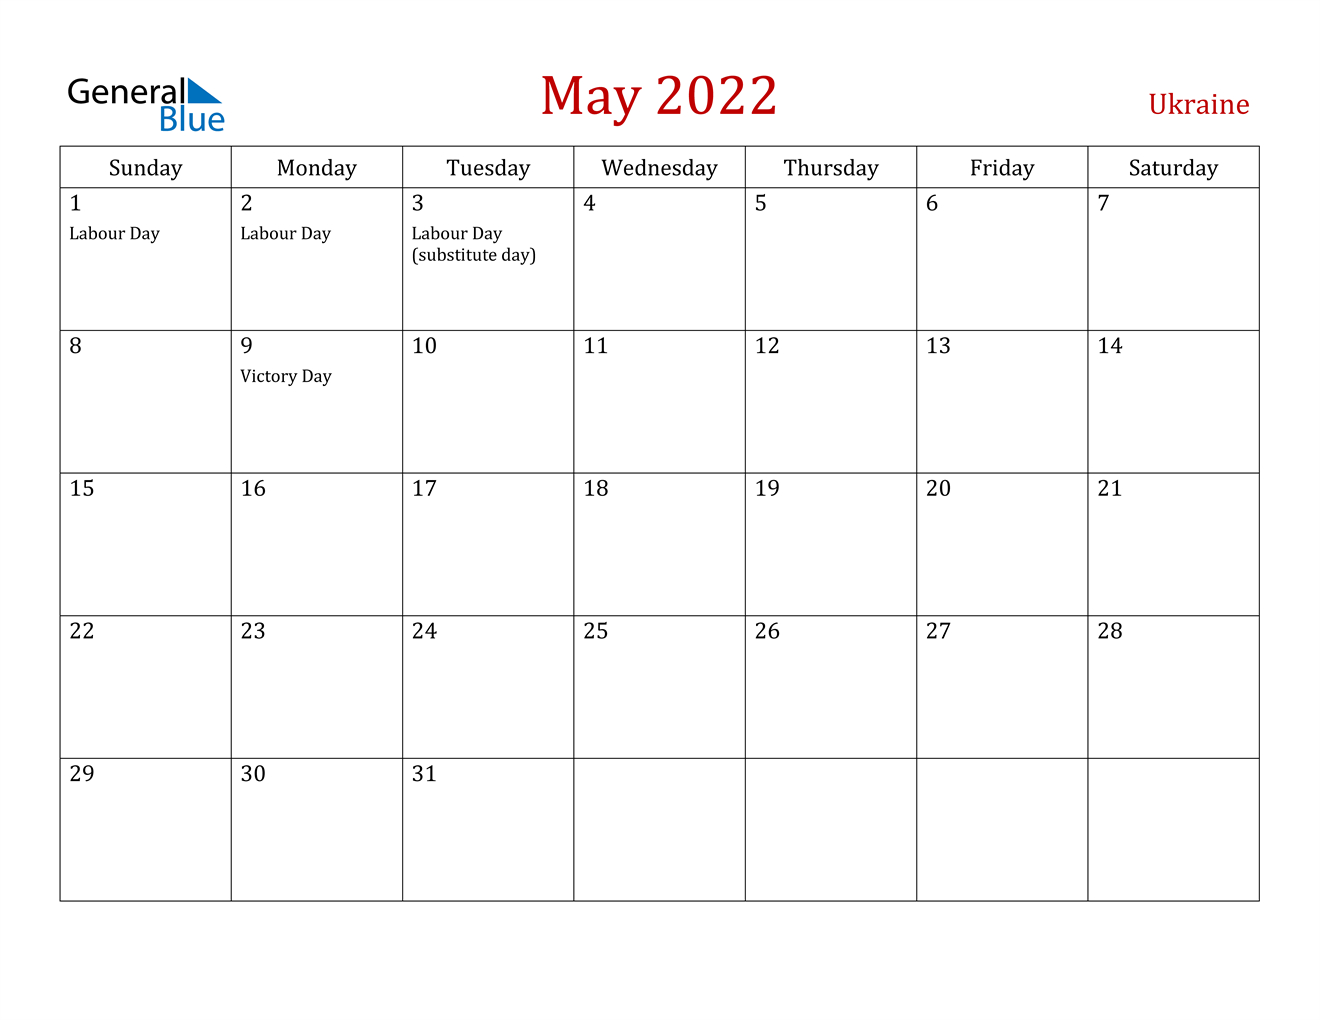 May 2022 Calendar - Ukraine